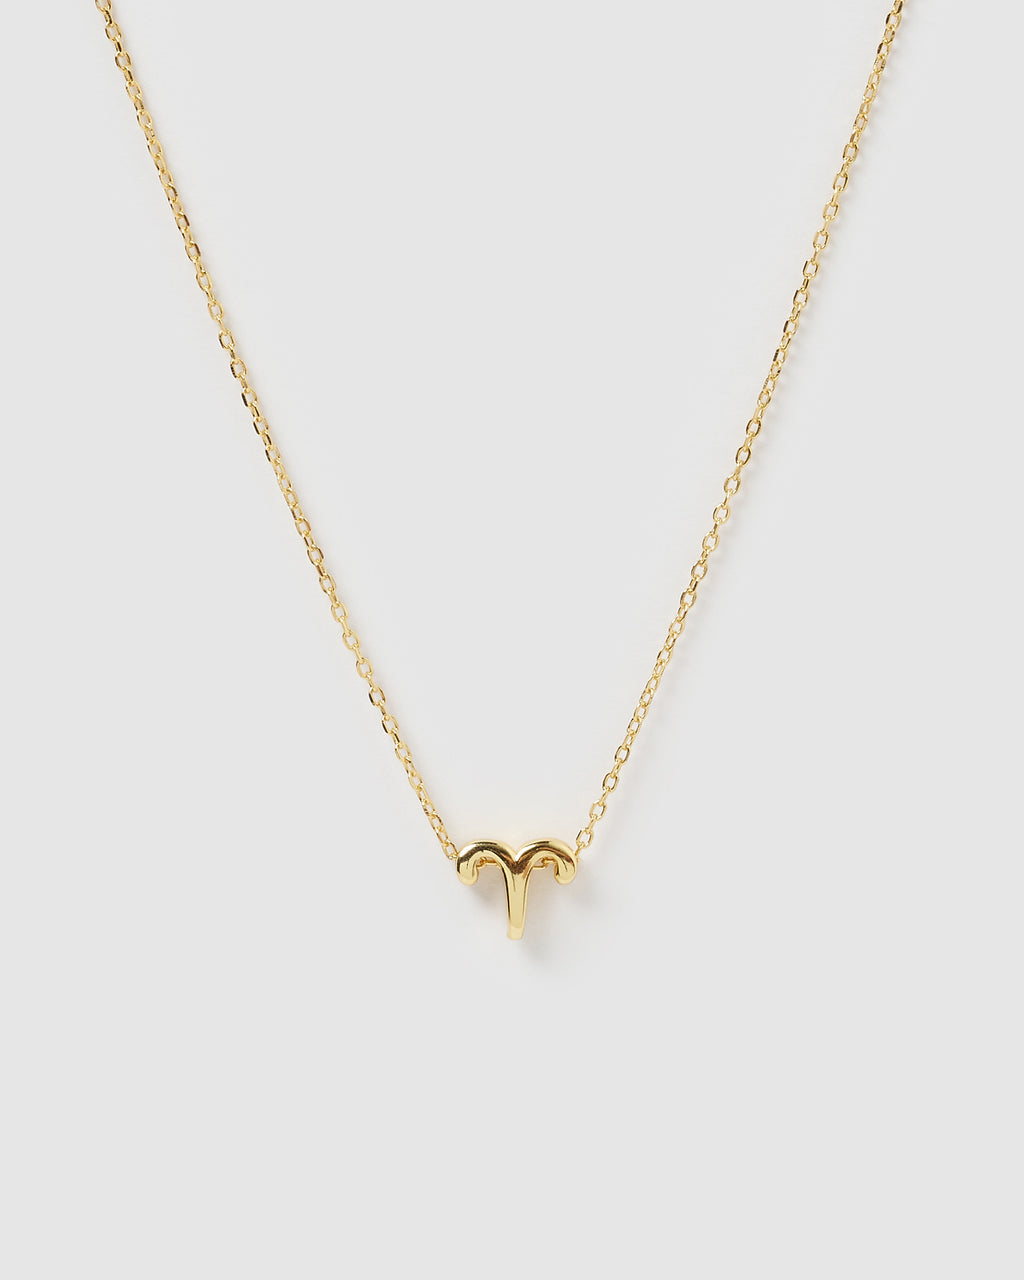 Izoa Aries Star Sign Symbol Necklace Gold